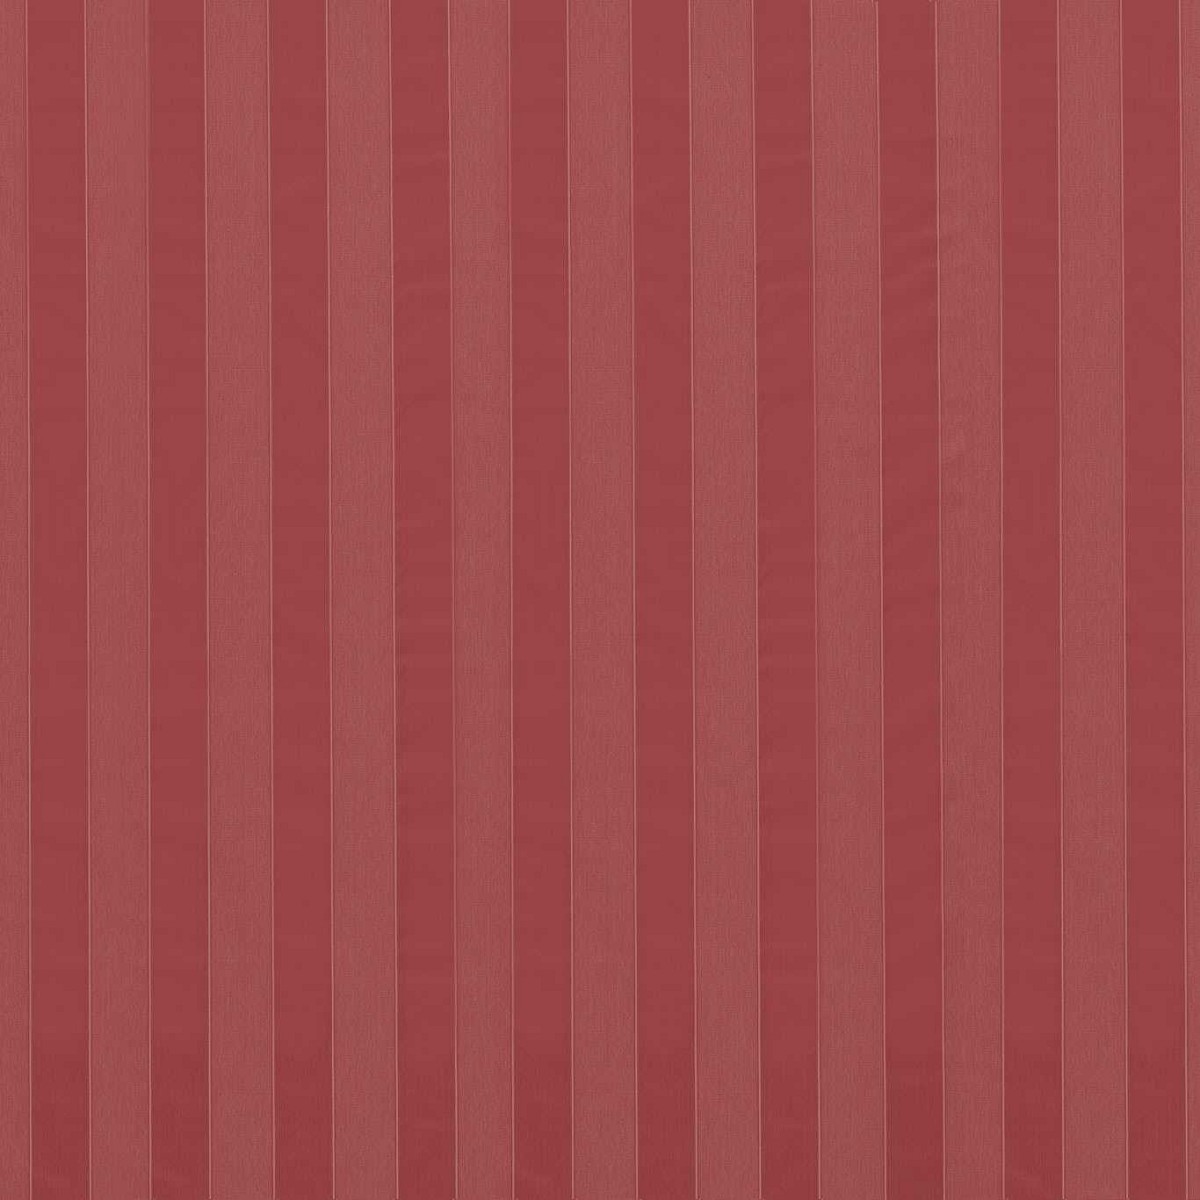 Suffolk Stripe Venetian Red Fabric by Zoffany